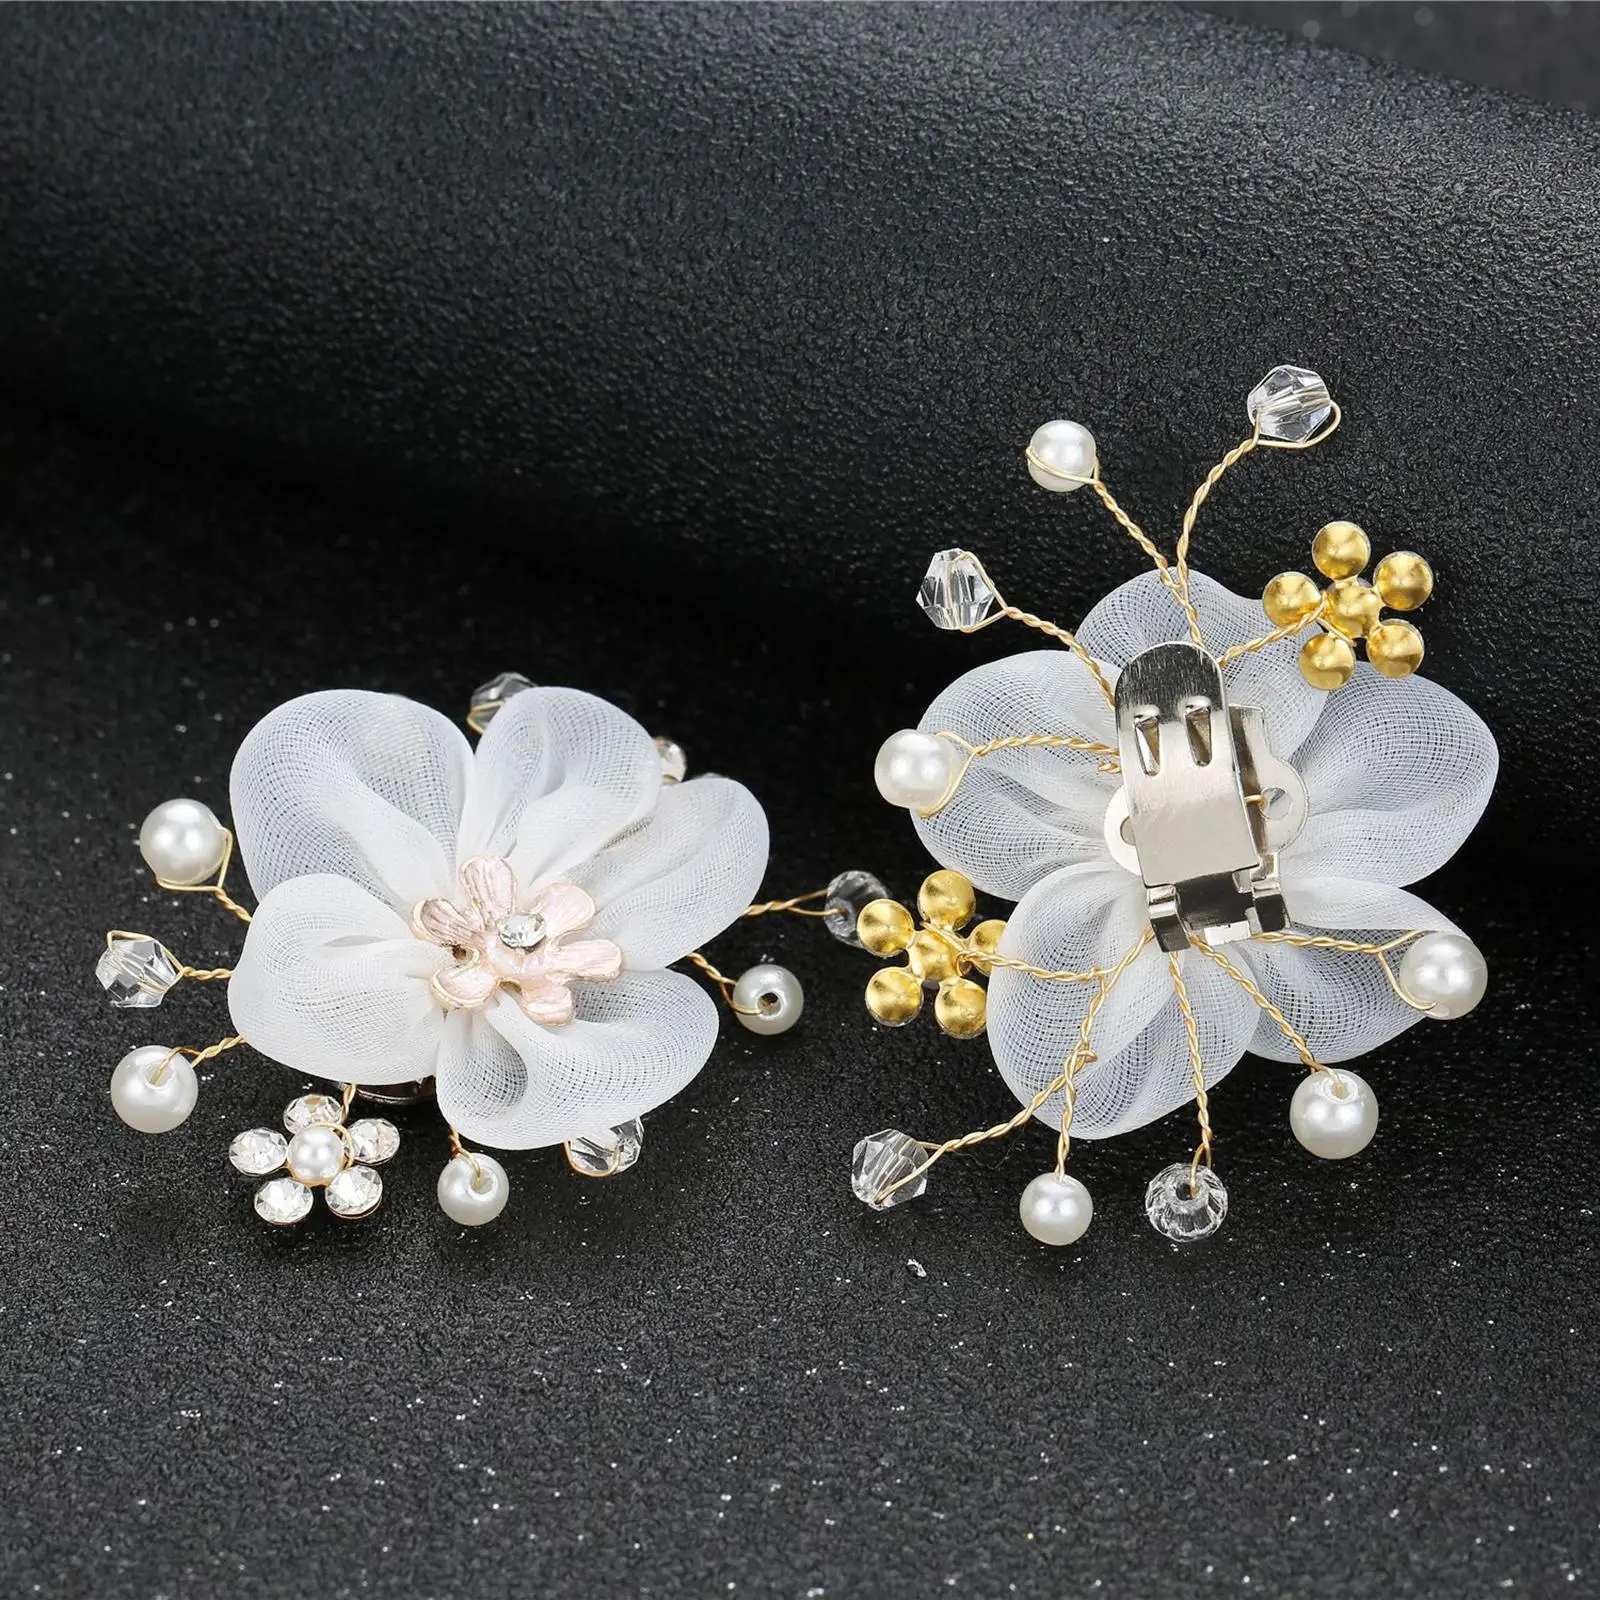 2x Flower Shoe Clips Bridal Removable Craft Jewelry Decor Decorative Shoe Clip Cloth Shoe Patch for Party Decor Gift DIY Banquet